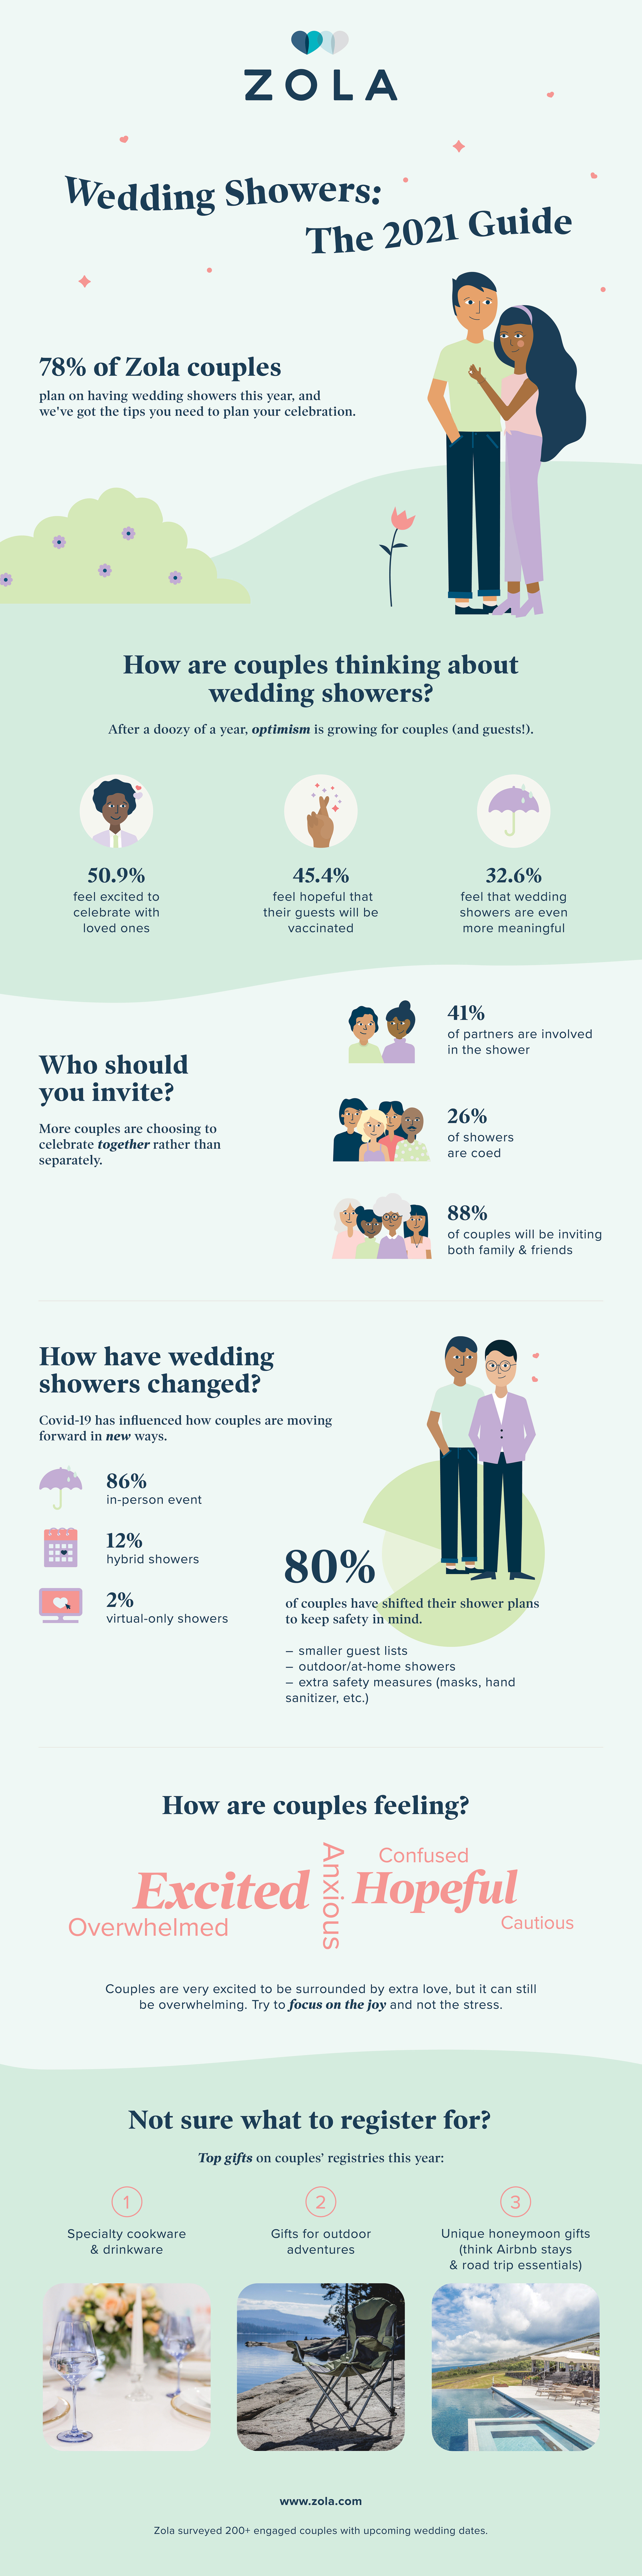 Zola Wedding Showers Infographic 1